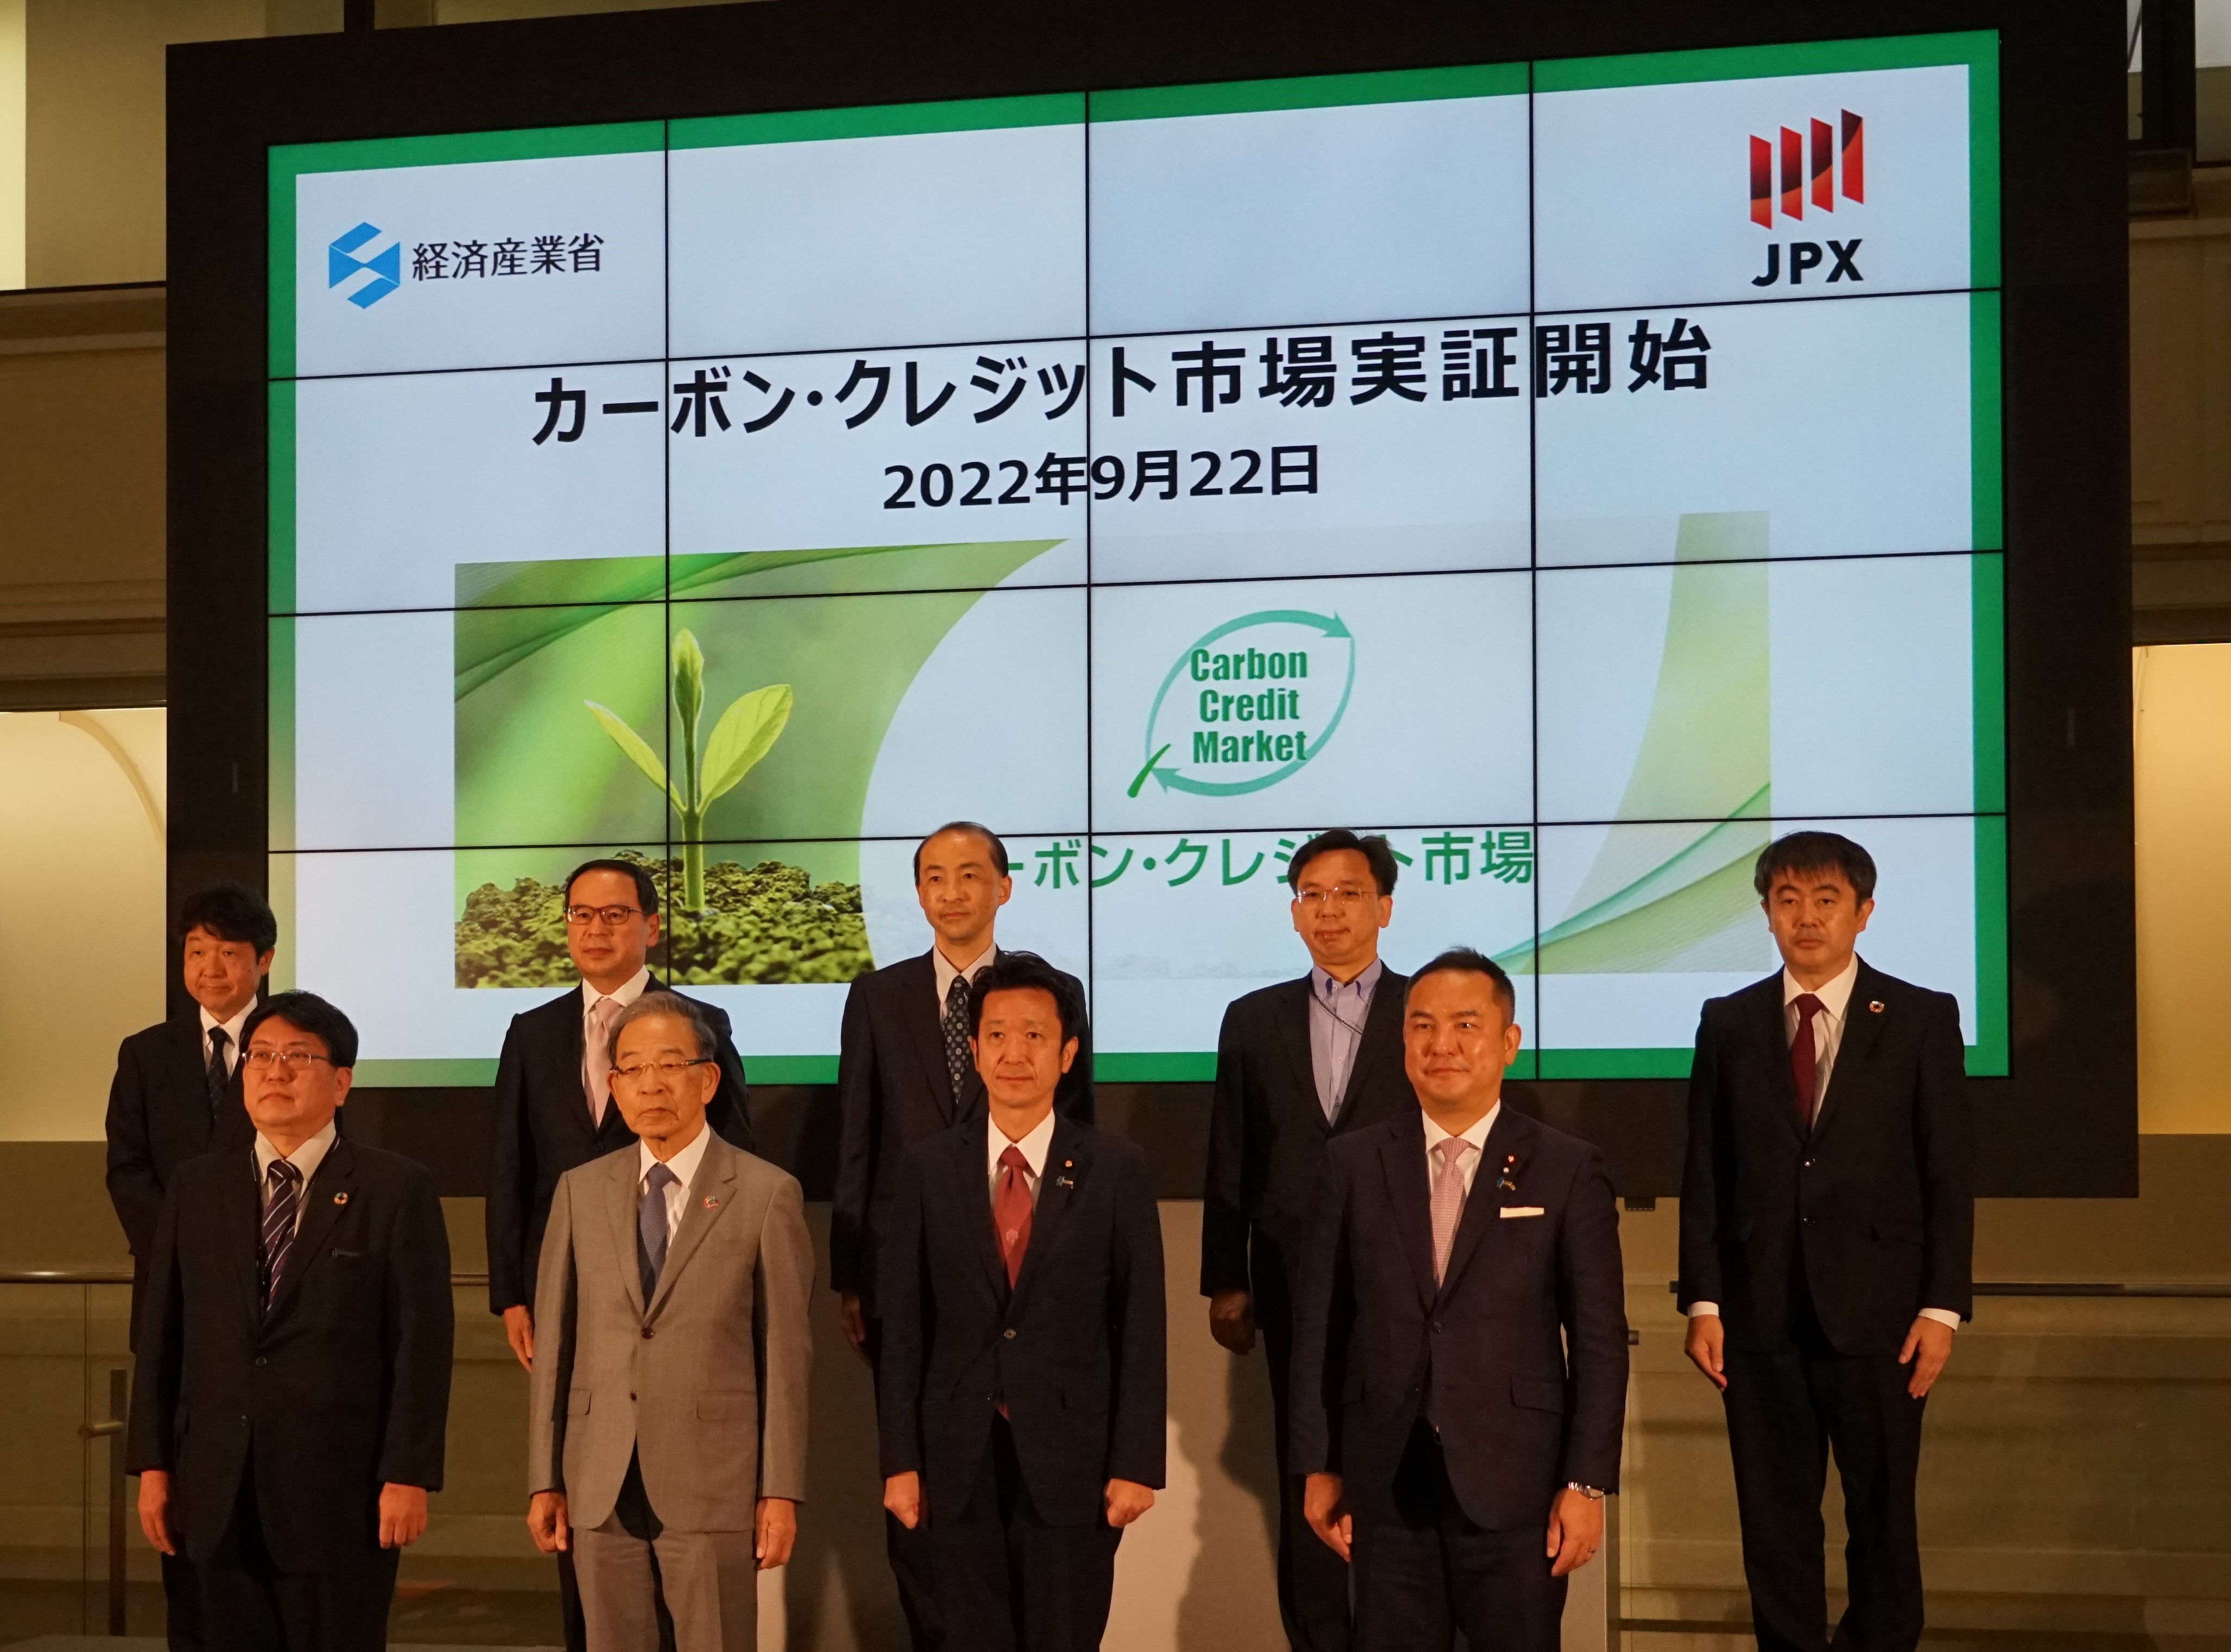 JPX Commences Carbon Credit Market Demonstration